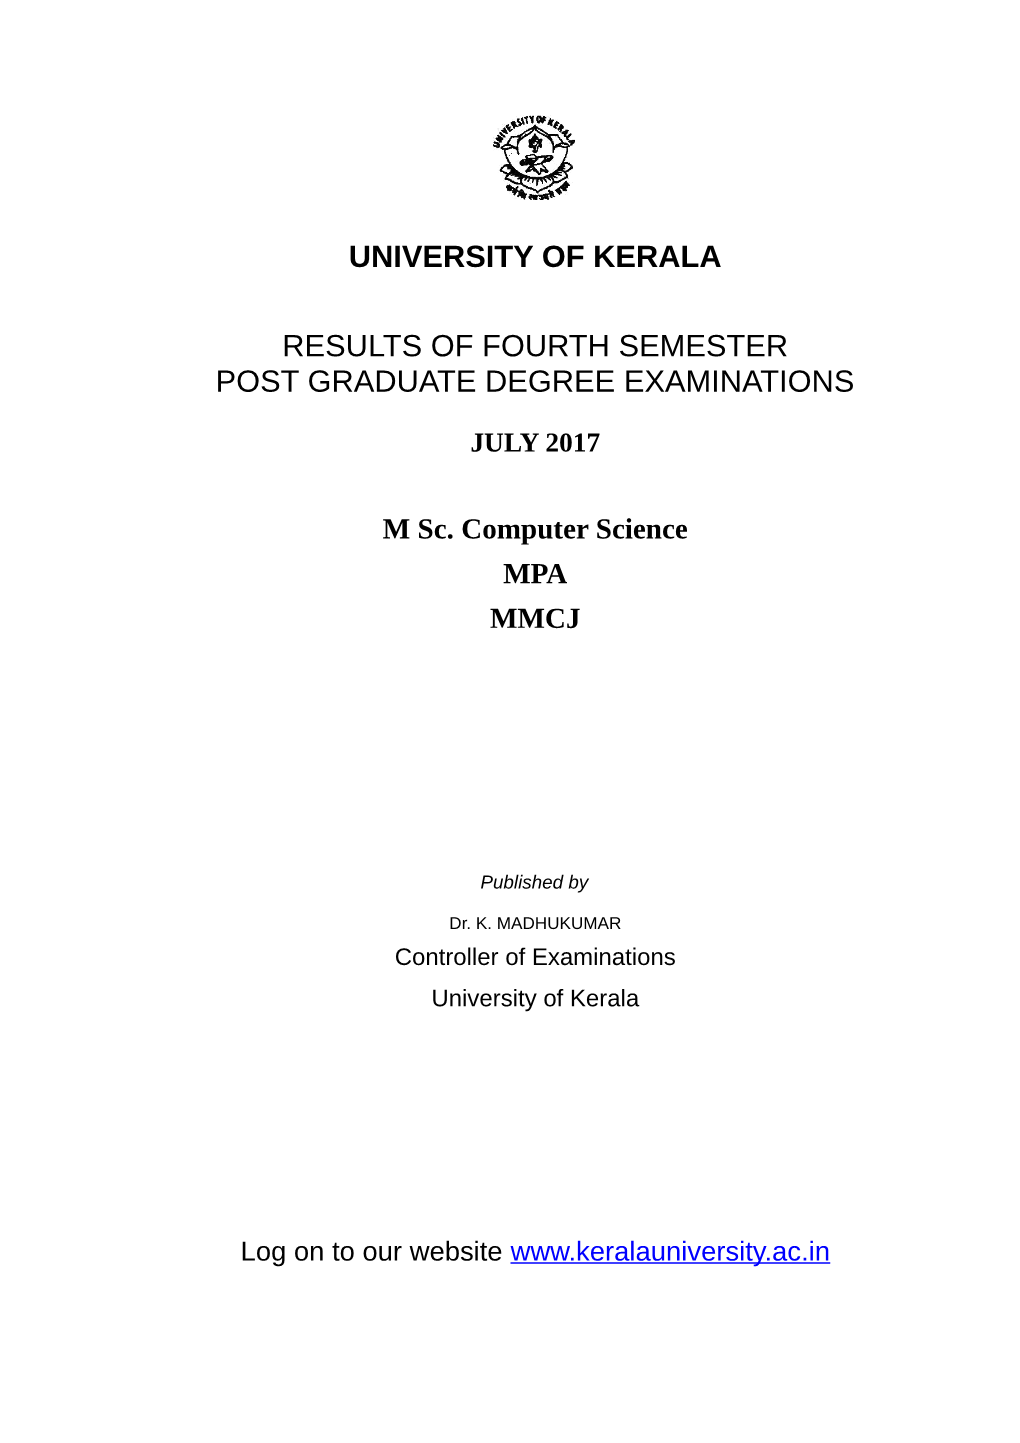 University of Kerala Results of Fourth Semester Post